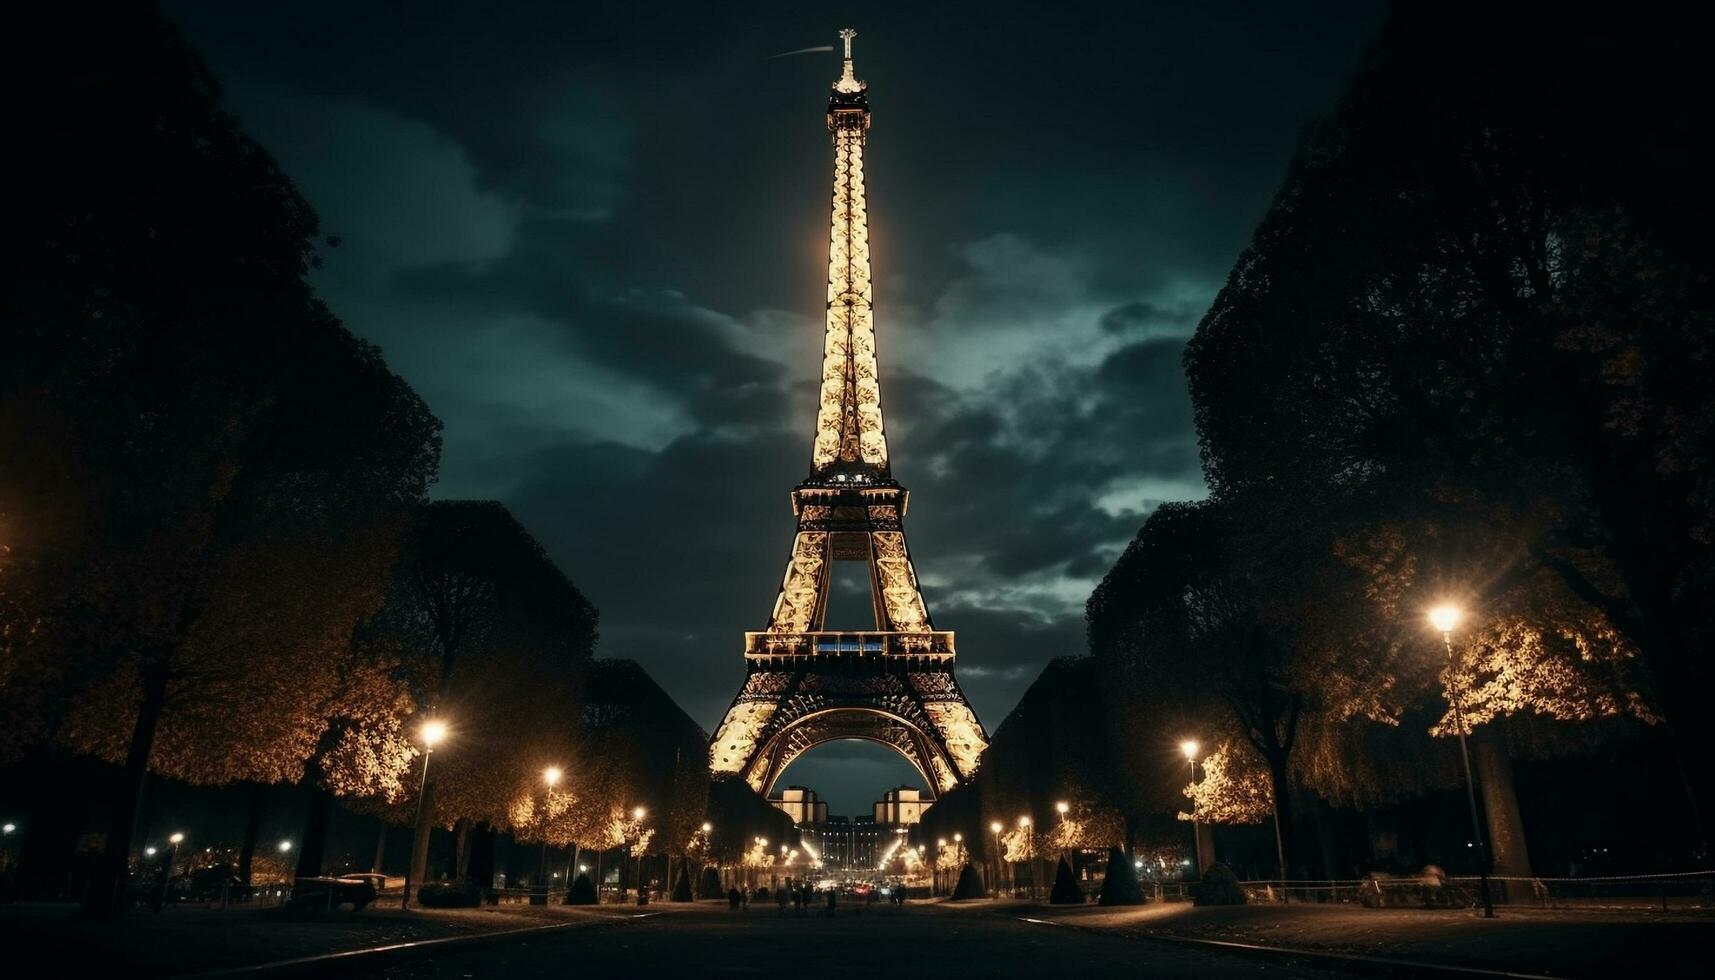 Illuminated architecture symbolizes city life and history generated by AI photo